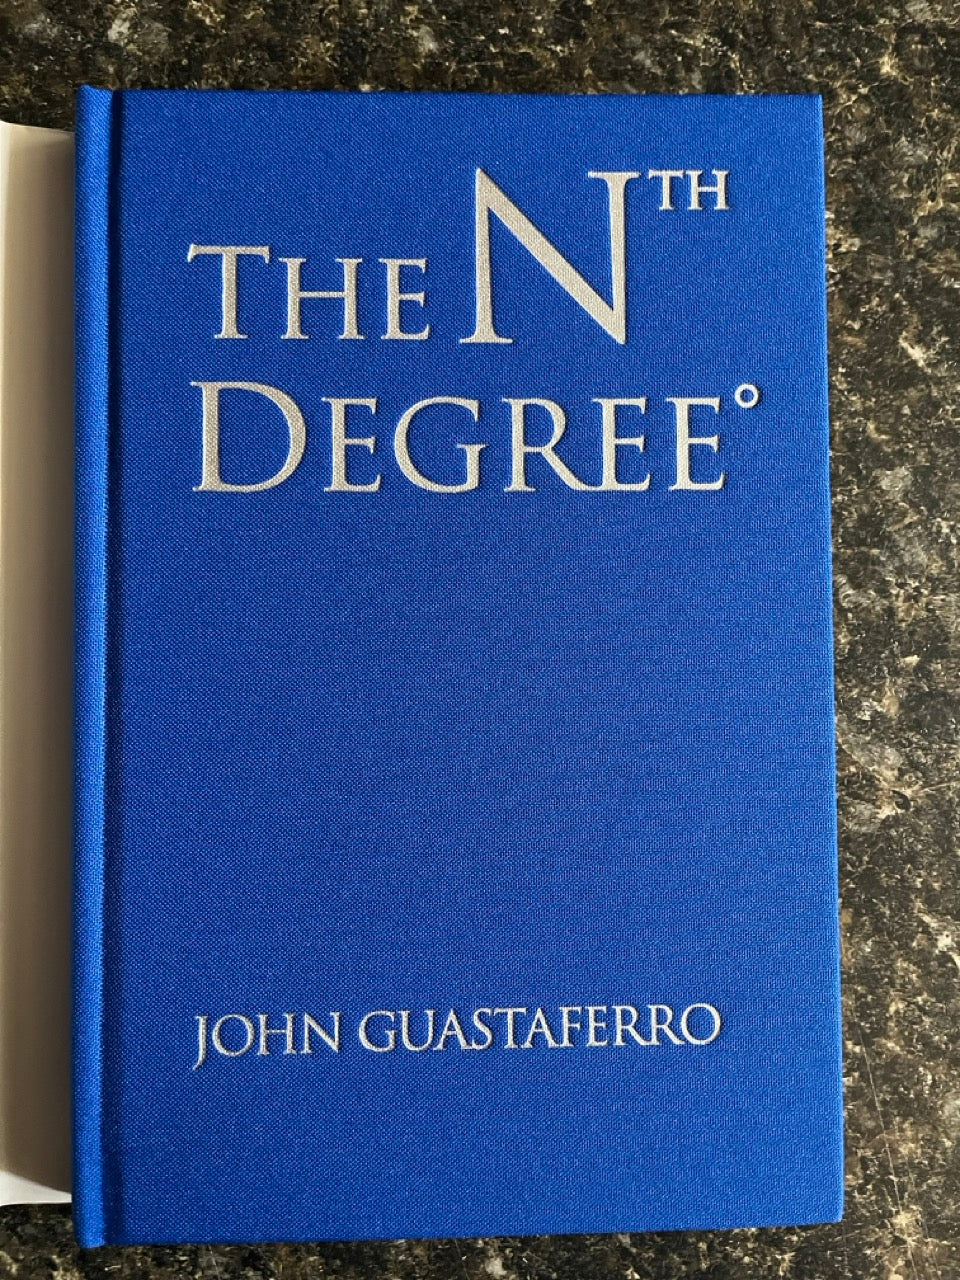 The Nth Degree - John Guastaferro